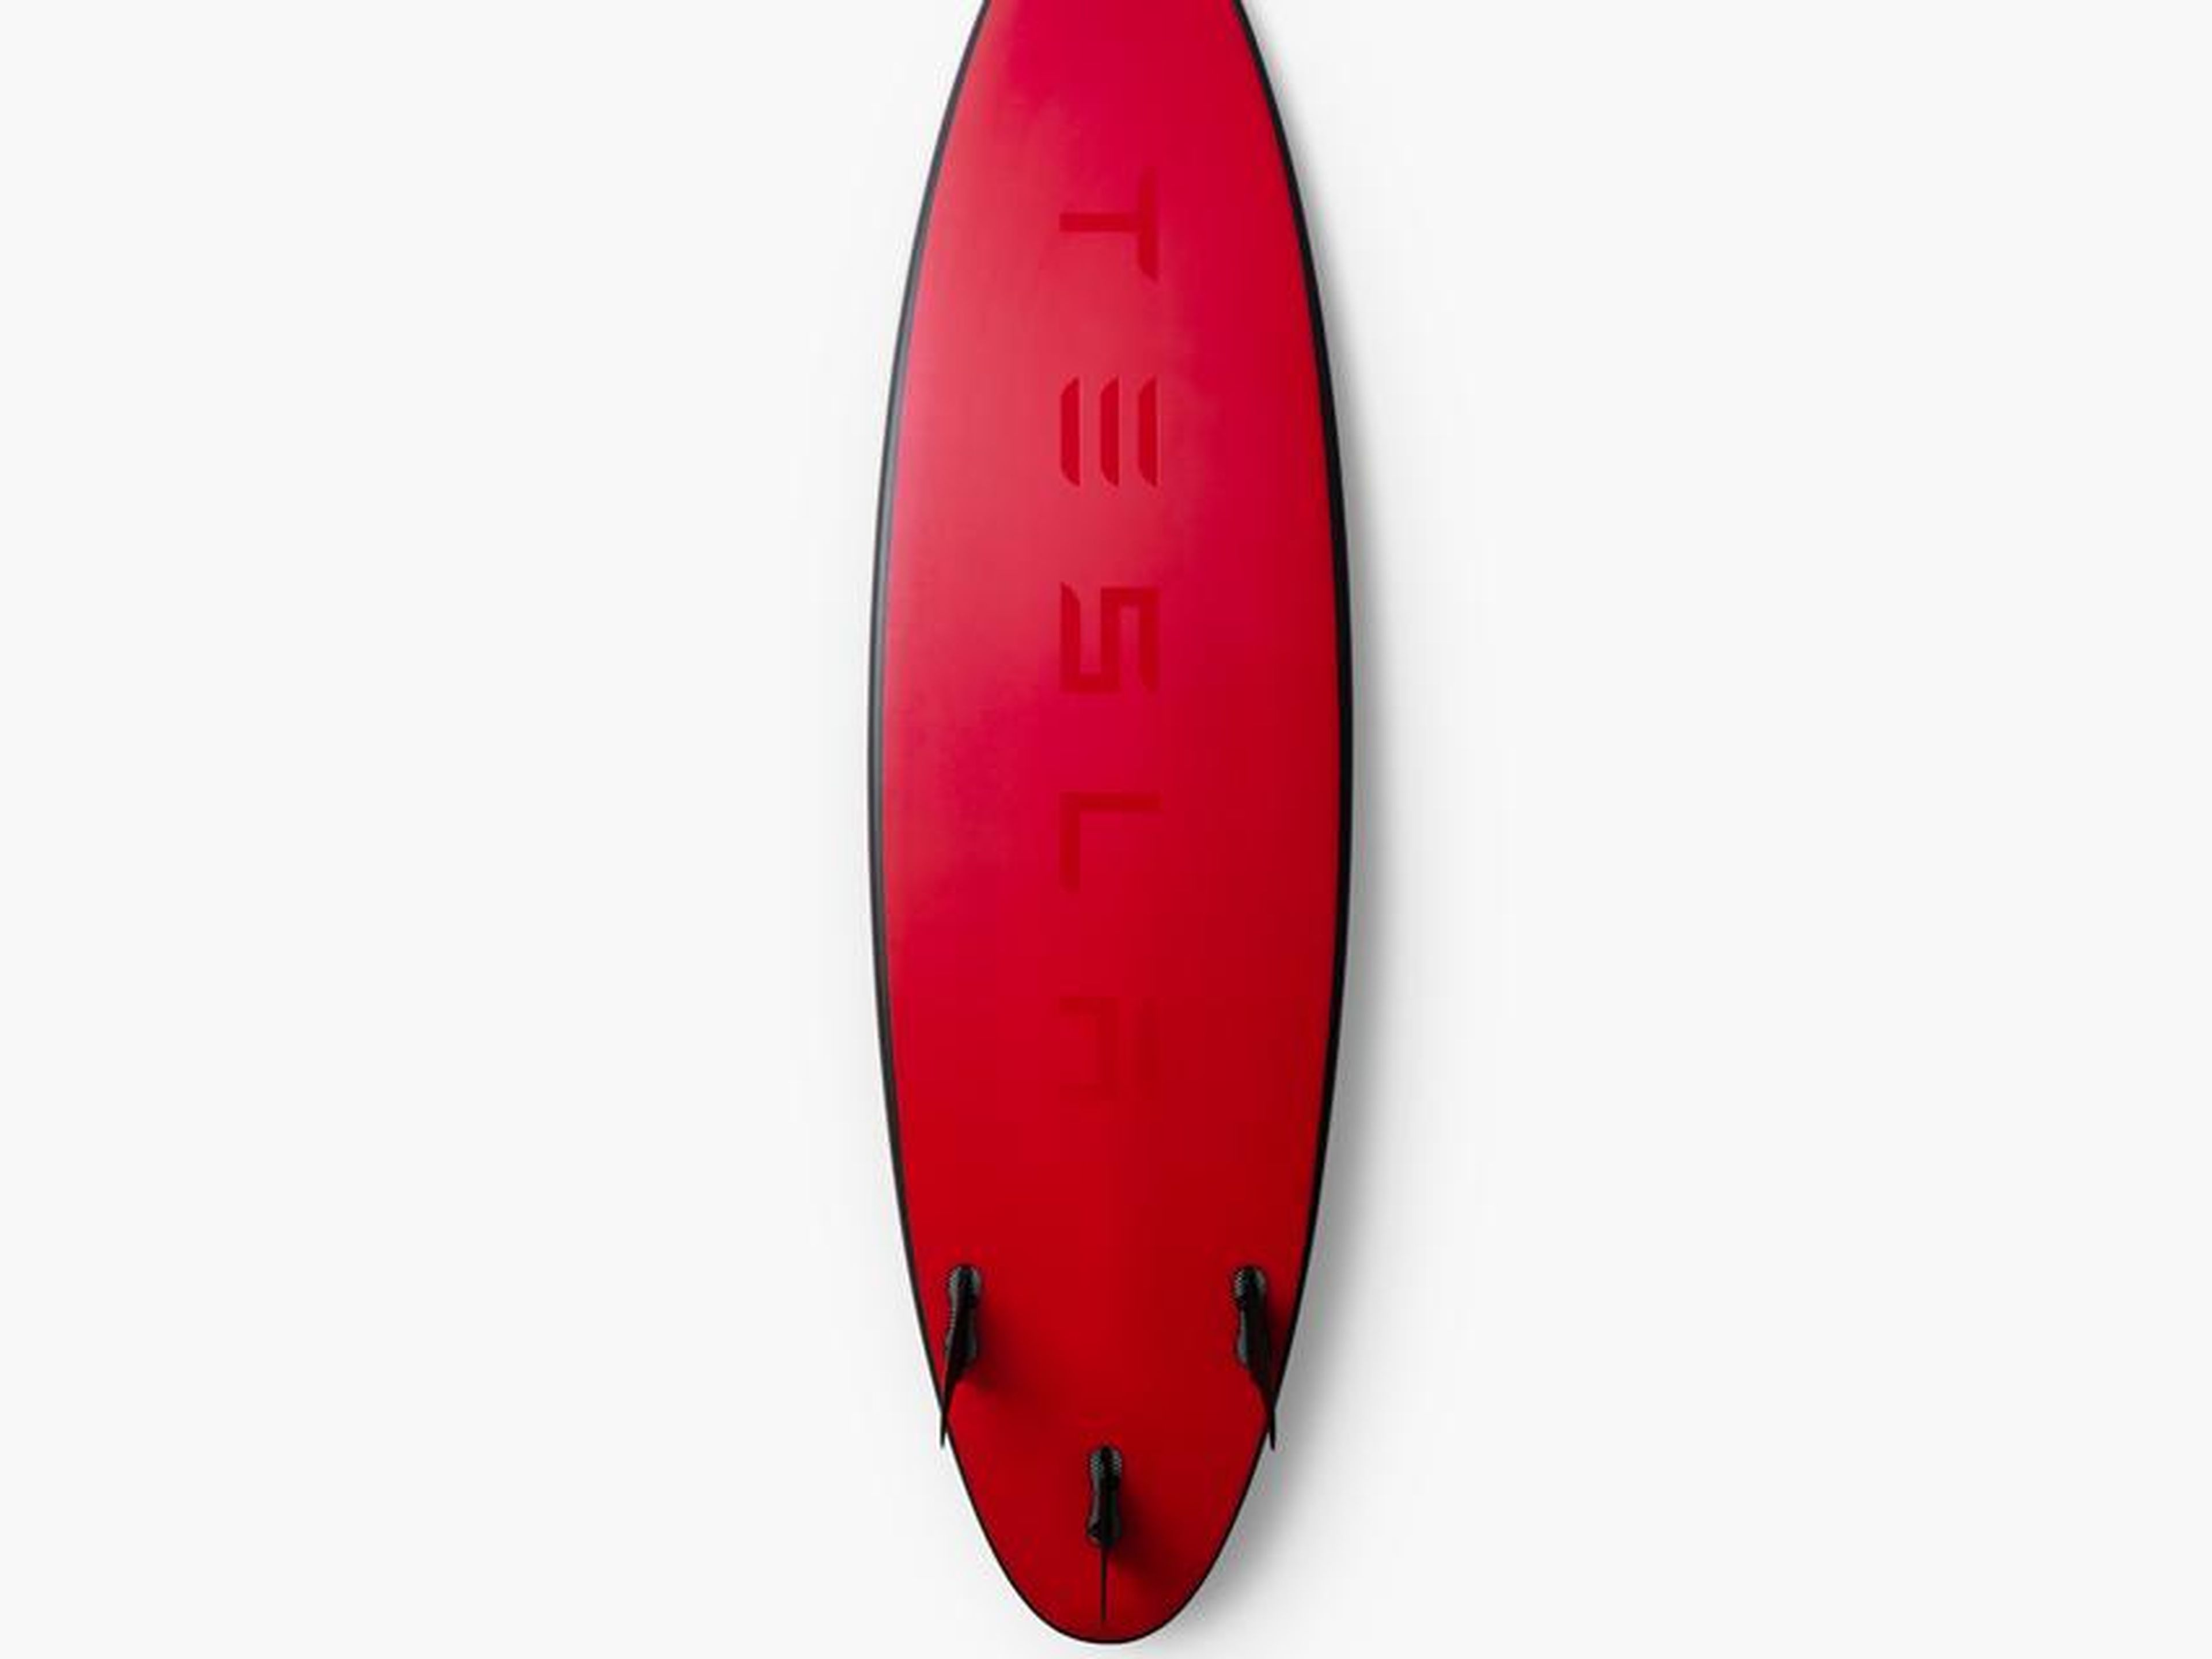 Tesla's surfboard